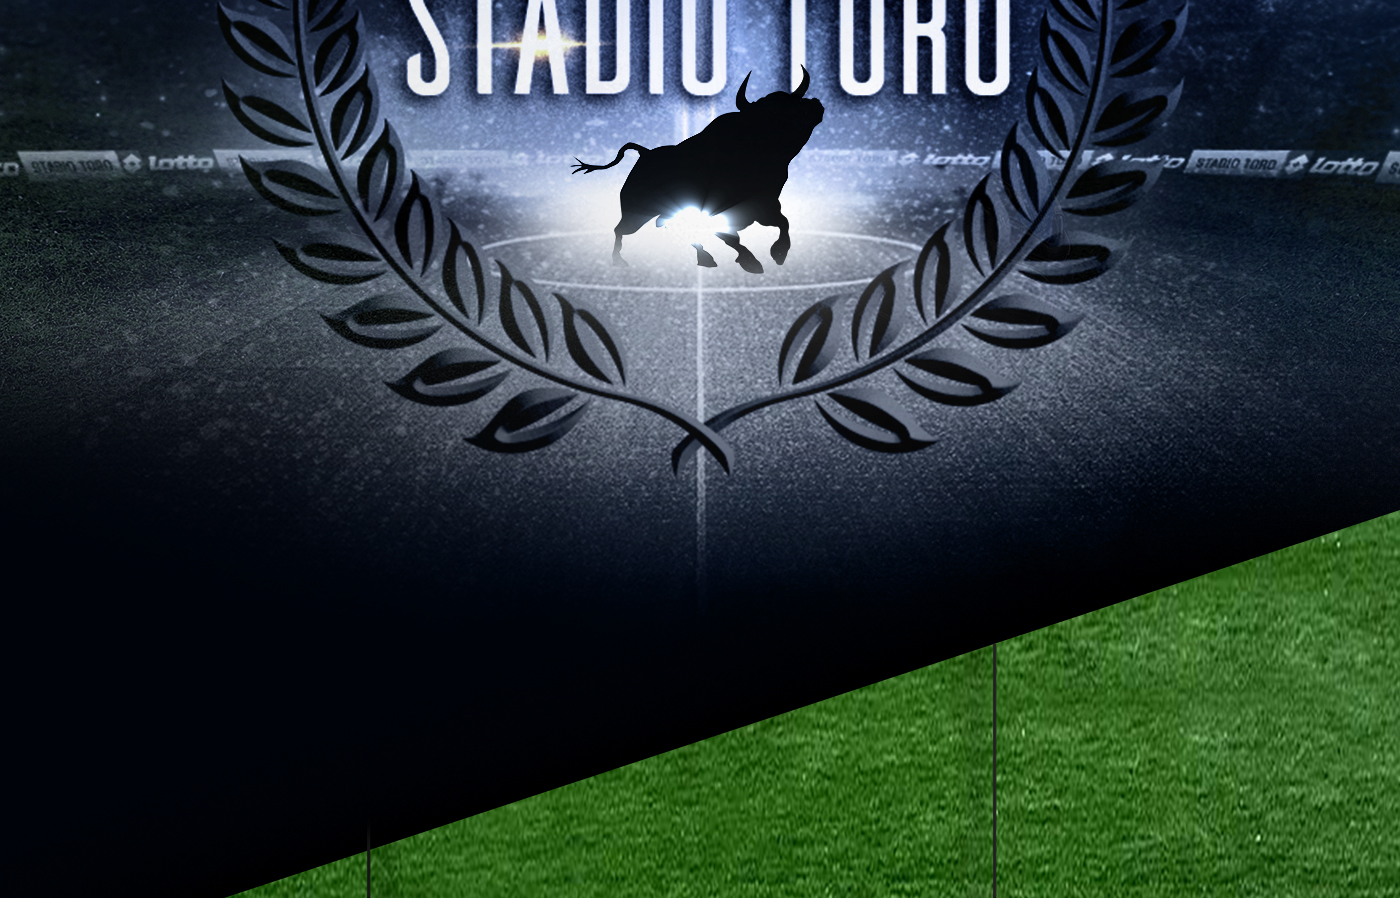 Lotto stadio toro design sport soccer toro Zaalvoetbalschoen Arena leather perfect fit